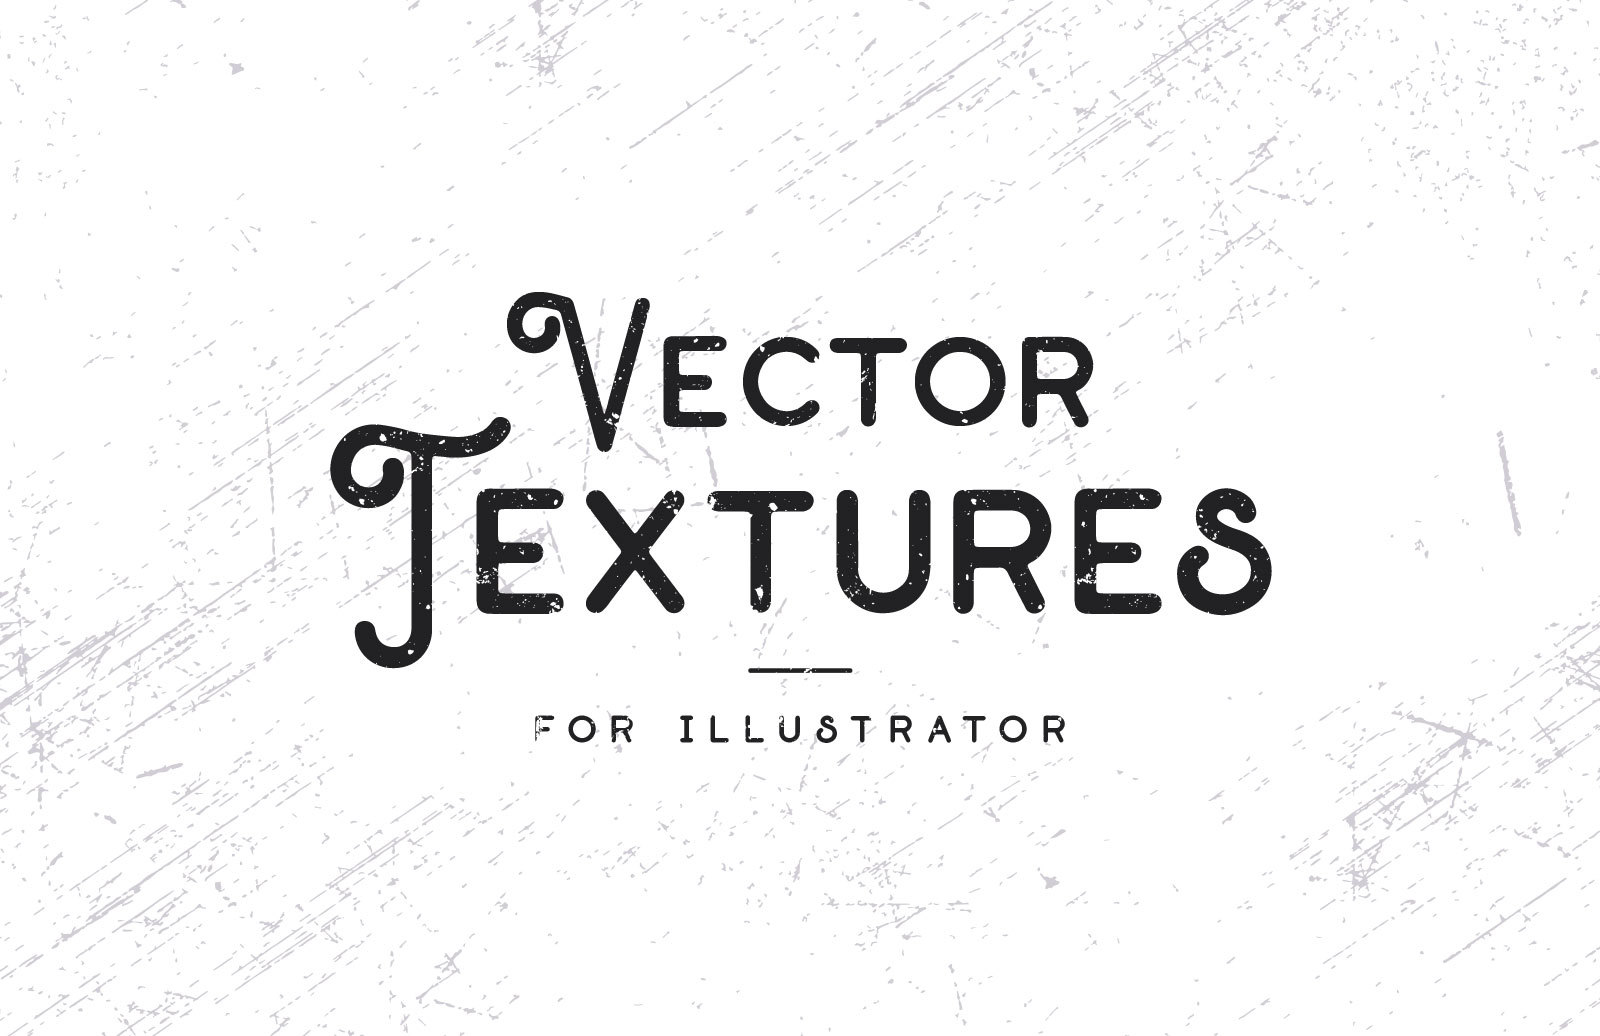 Kpt Vector Effects For Illustrator Download